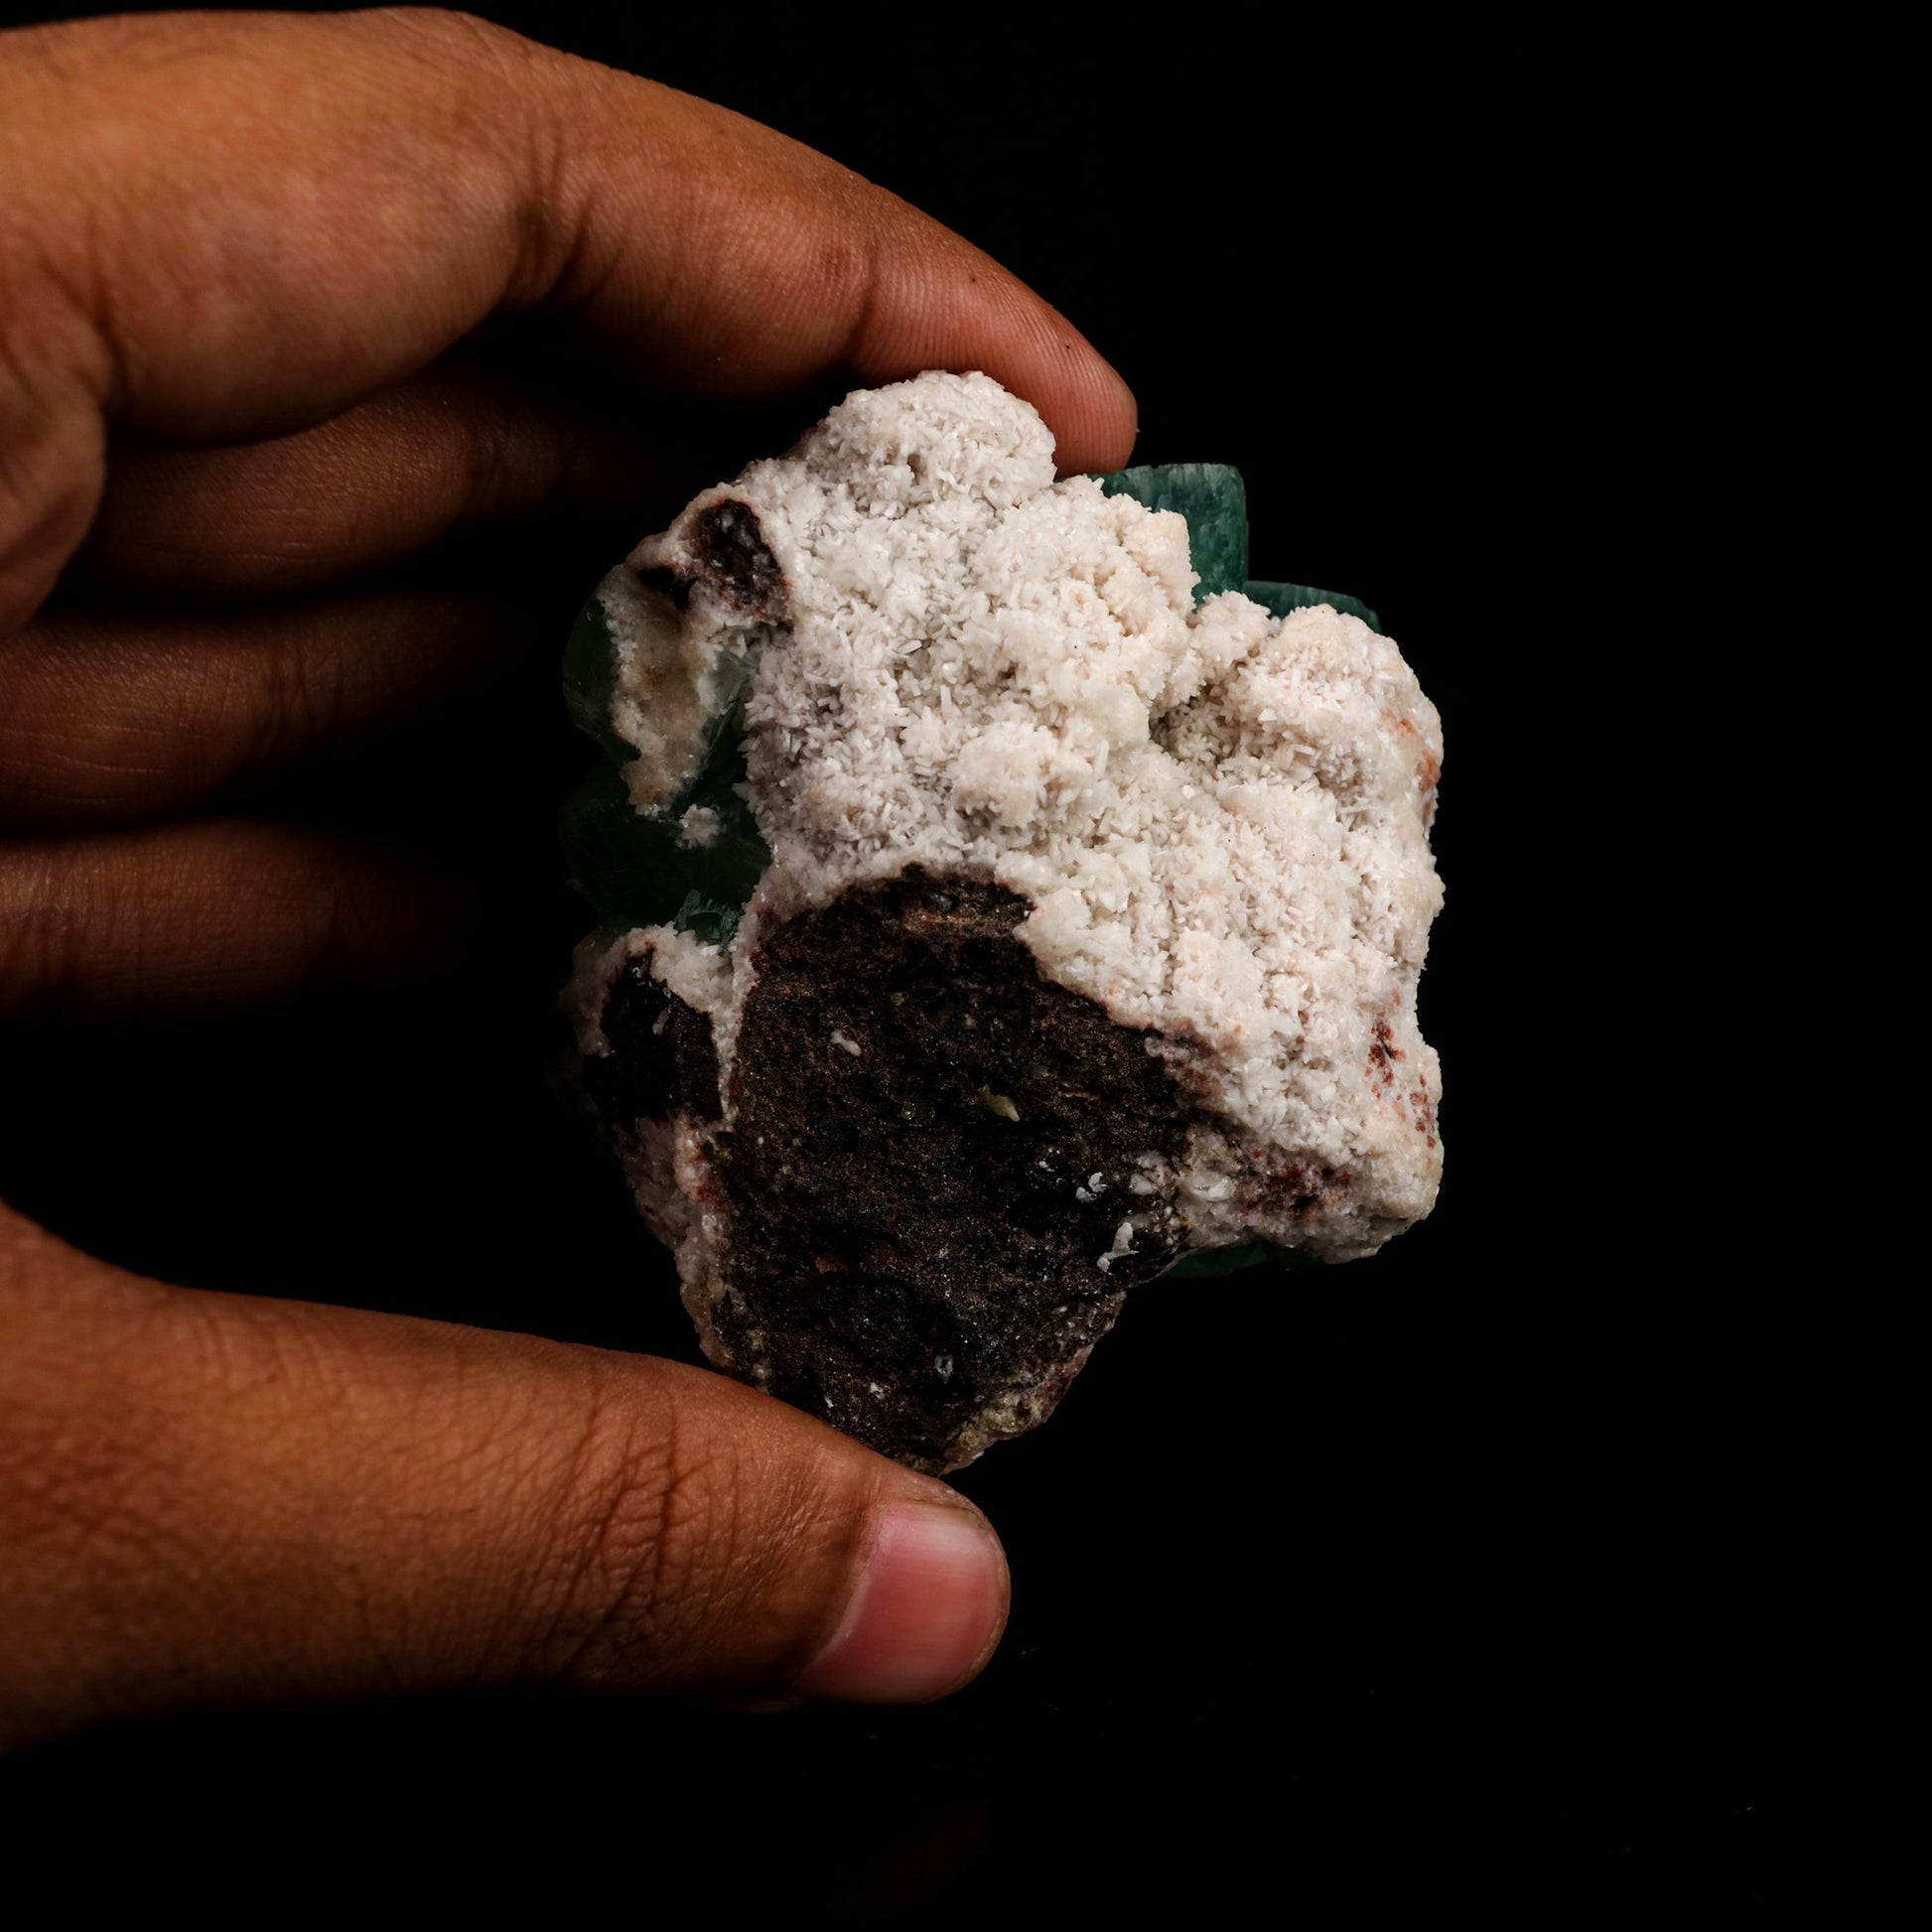 Apophyllite Green Cube on Chalcedony Natural Mineral Specimen # B 6388 Apophyllite Superb Minerals 